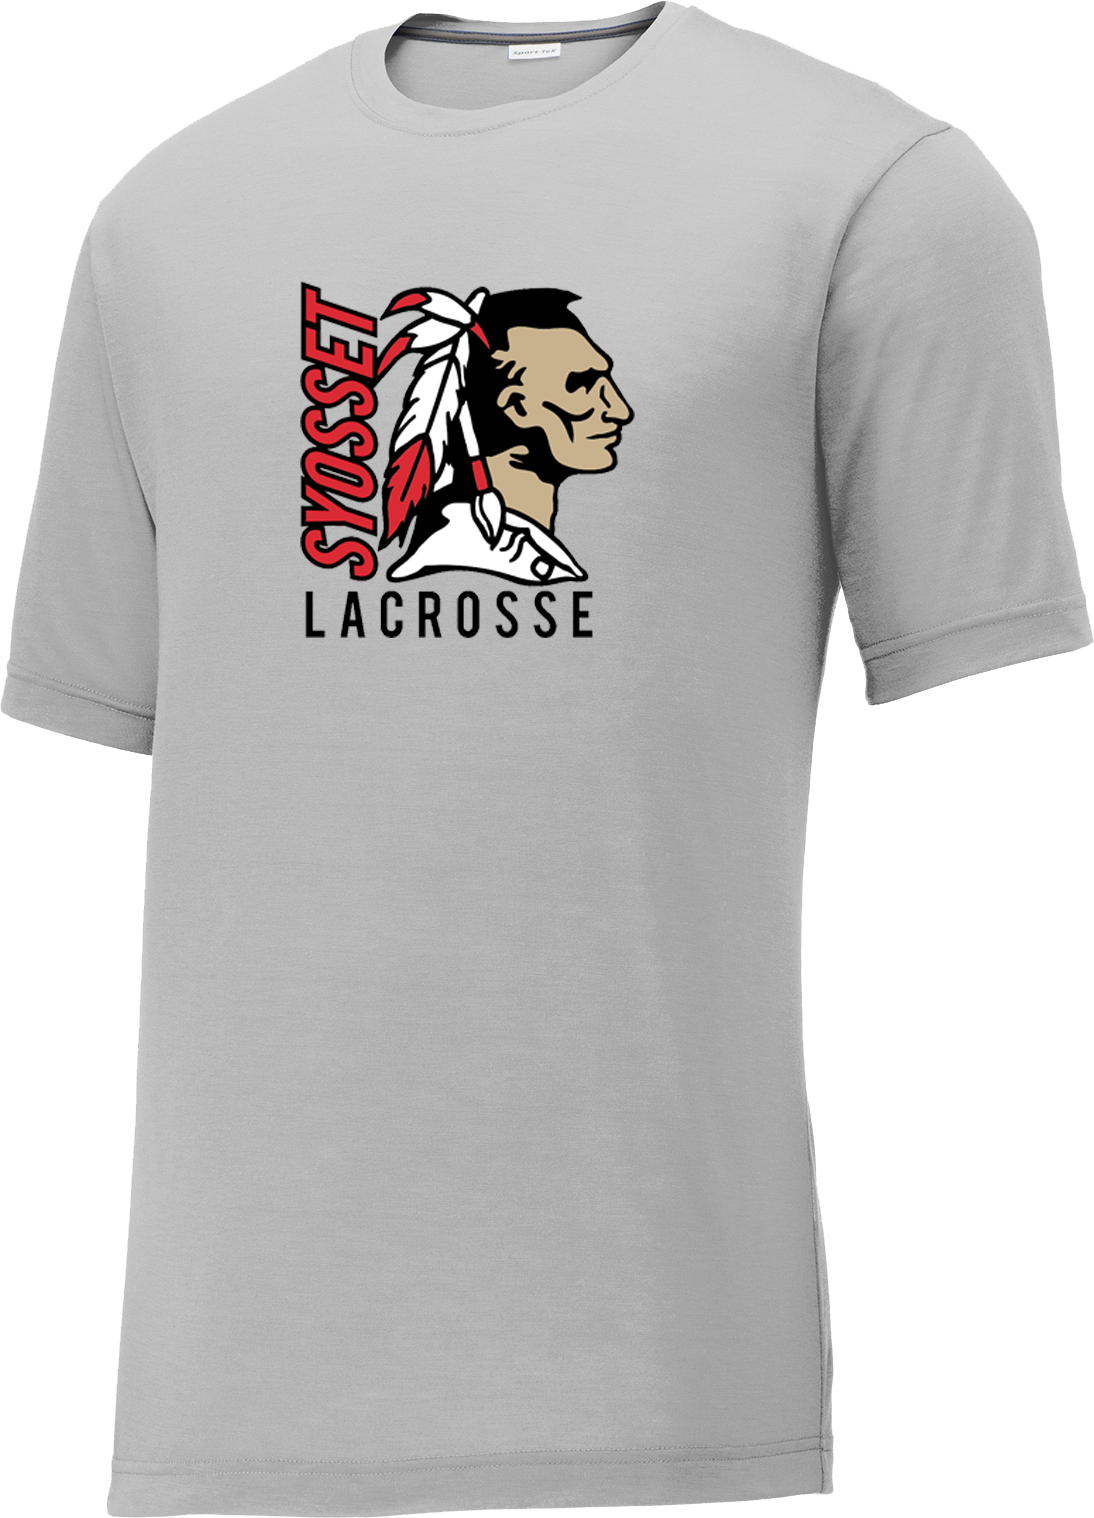 Syosset Lacrosse CottonTouch Performance T-Shirt